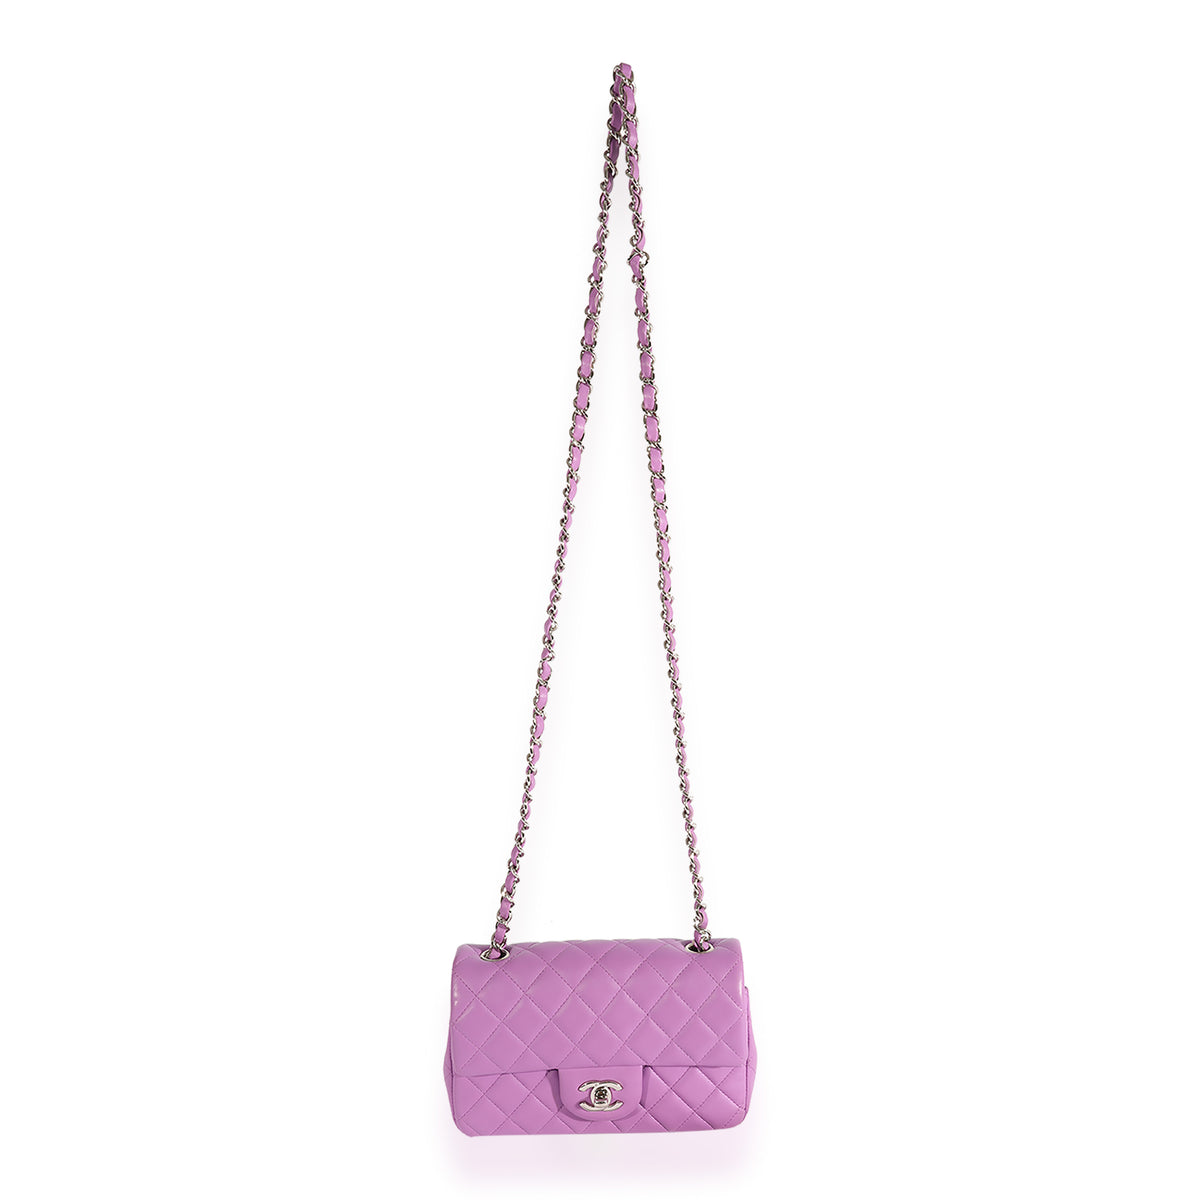 Chanel Purple Quilted Lambskin Mini Rectangular Classic Flap Bag